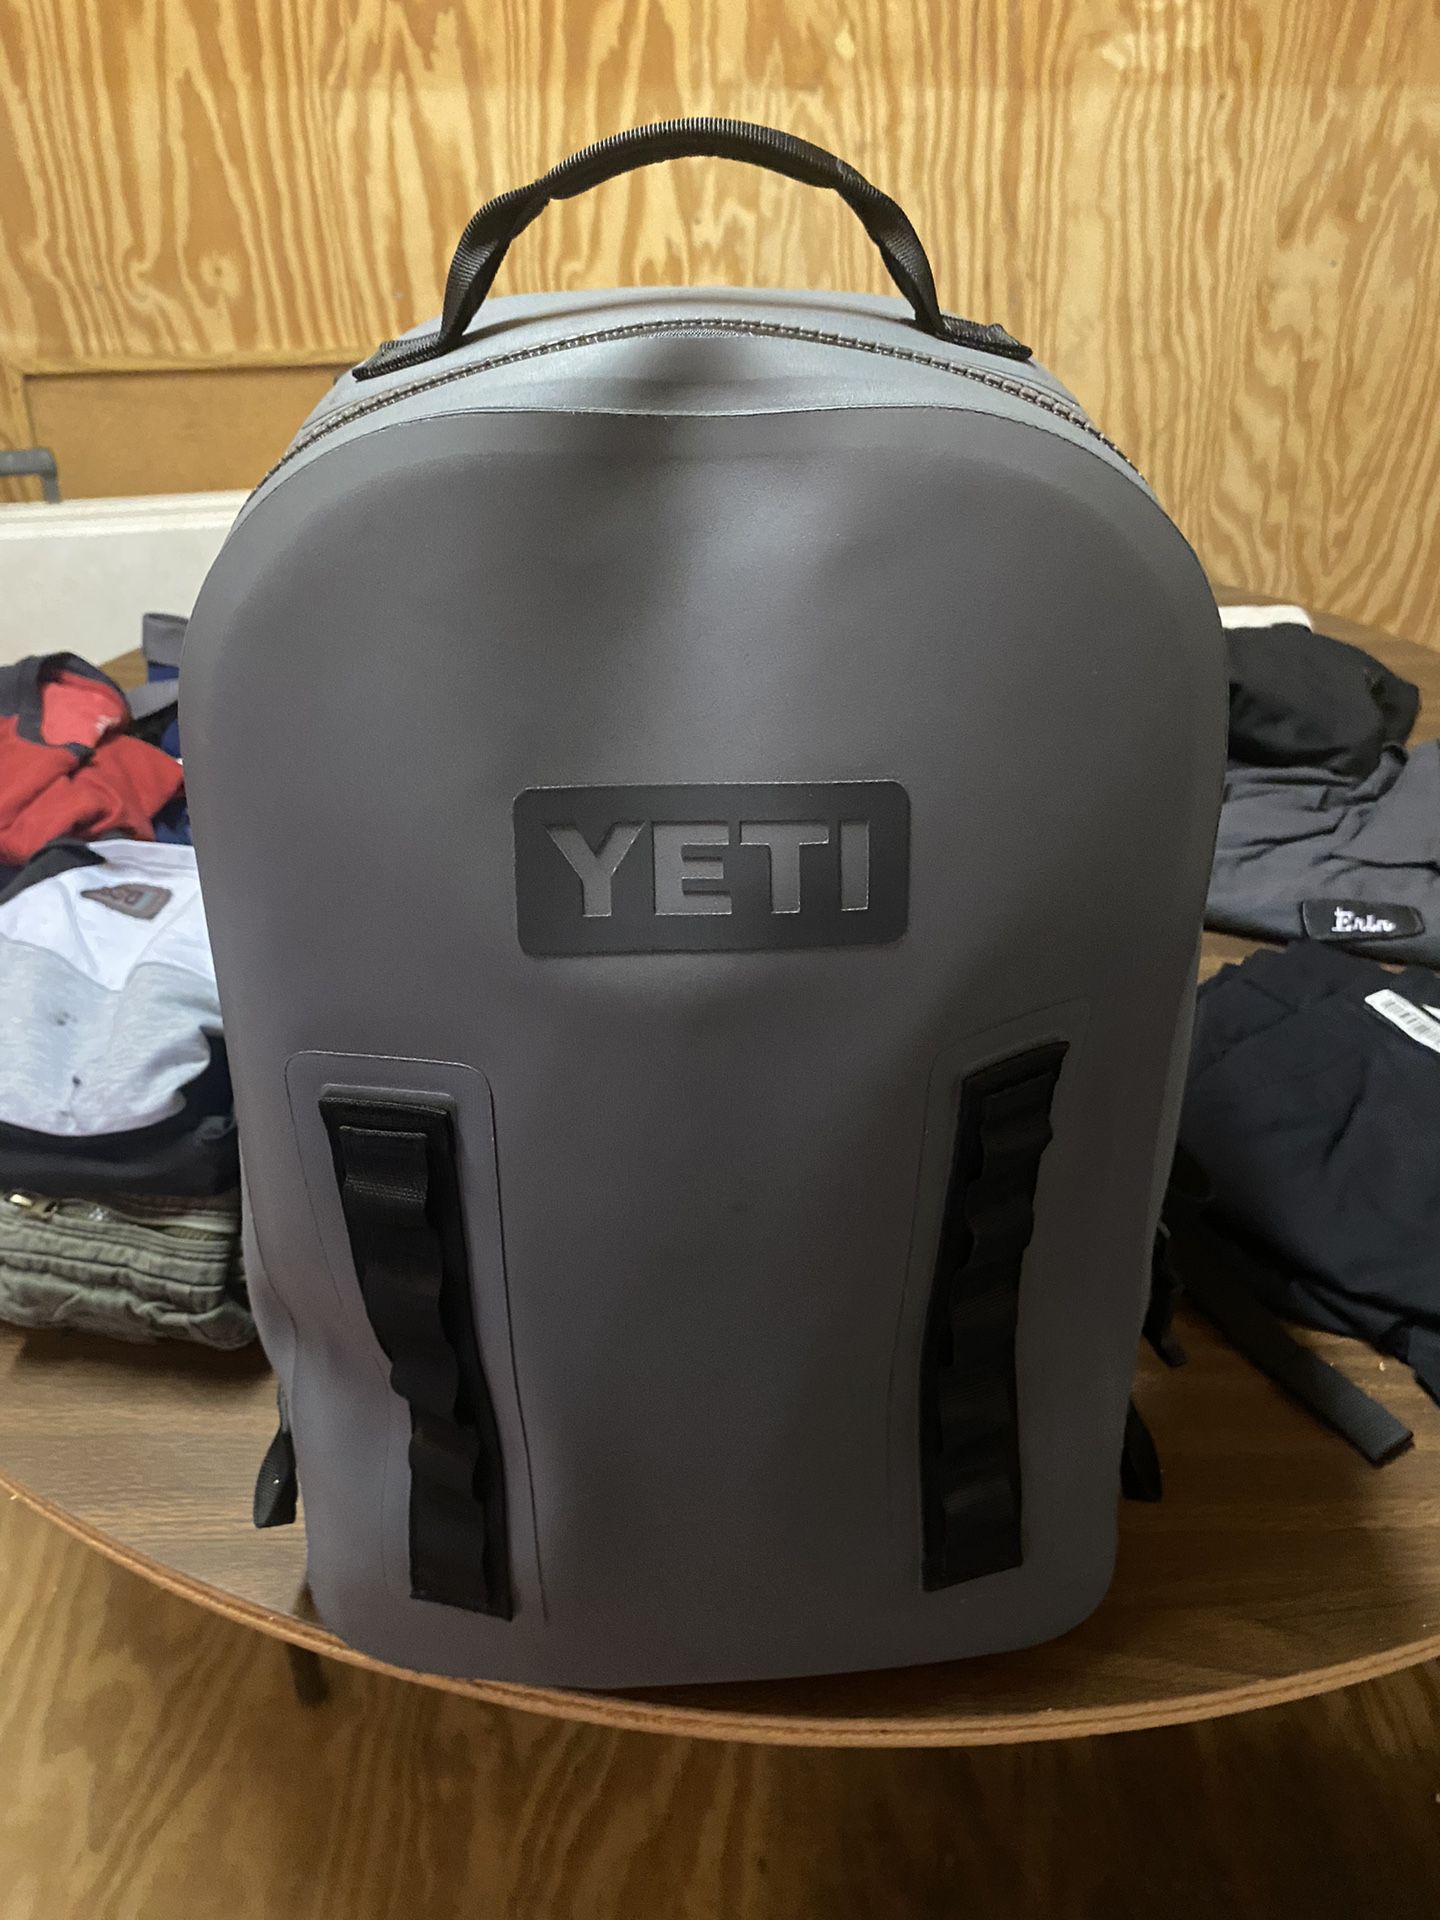 Yeti Backpack